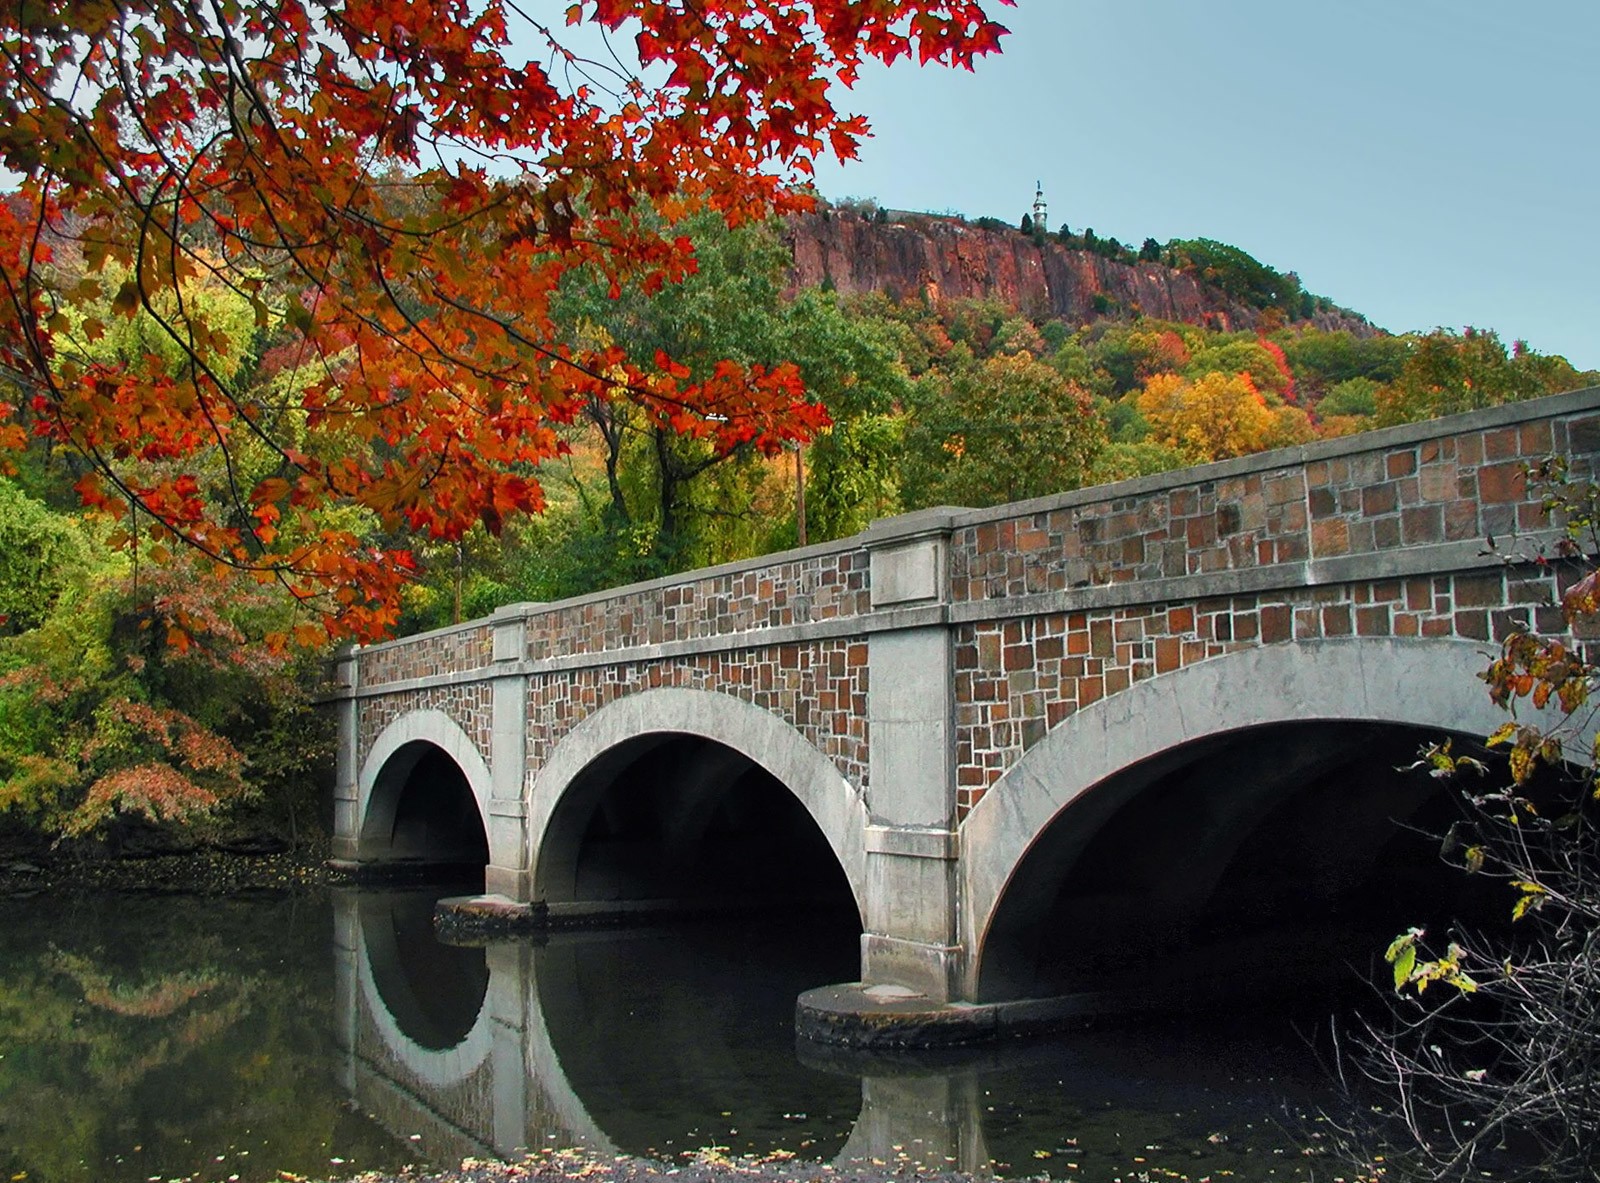 Италия каменный мост. Каменный мост Чжаочжоу. Каменный мост Инсбрук. Мост крейгеллахи. Осенний мост.